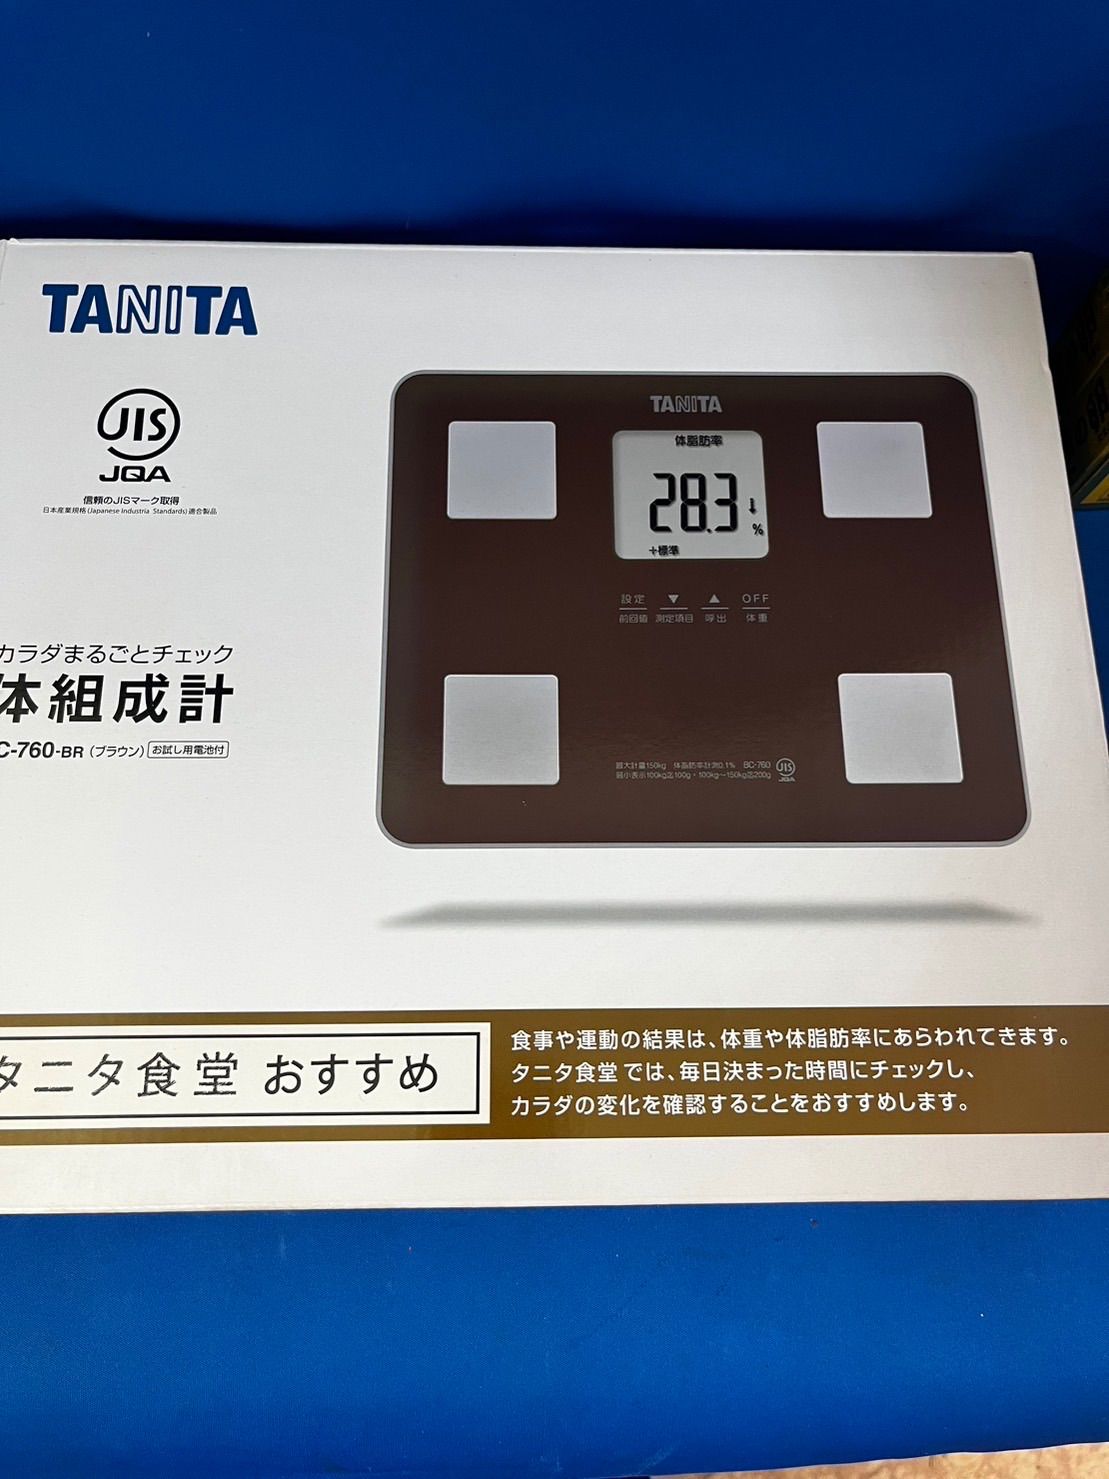 TANITA タニタ 体組成計 体重計 BC-760 - 健康管理・計測計